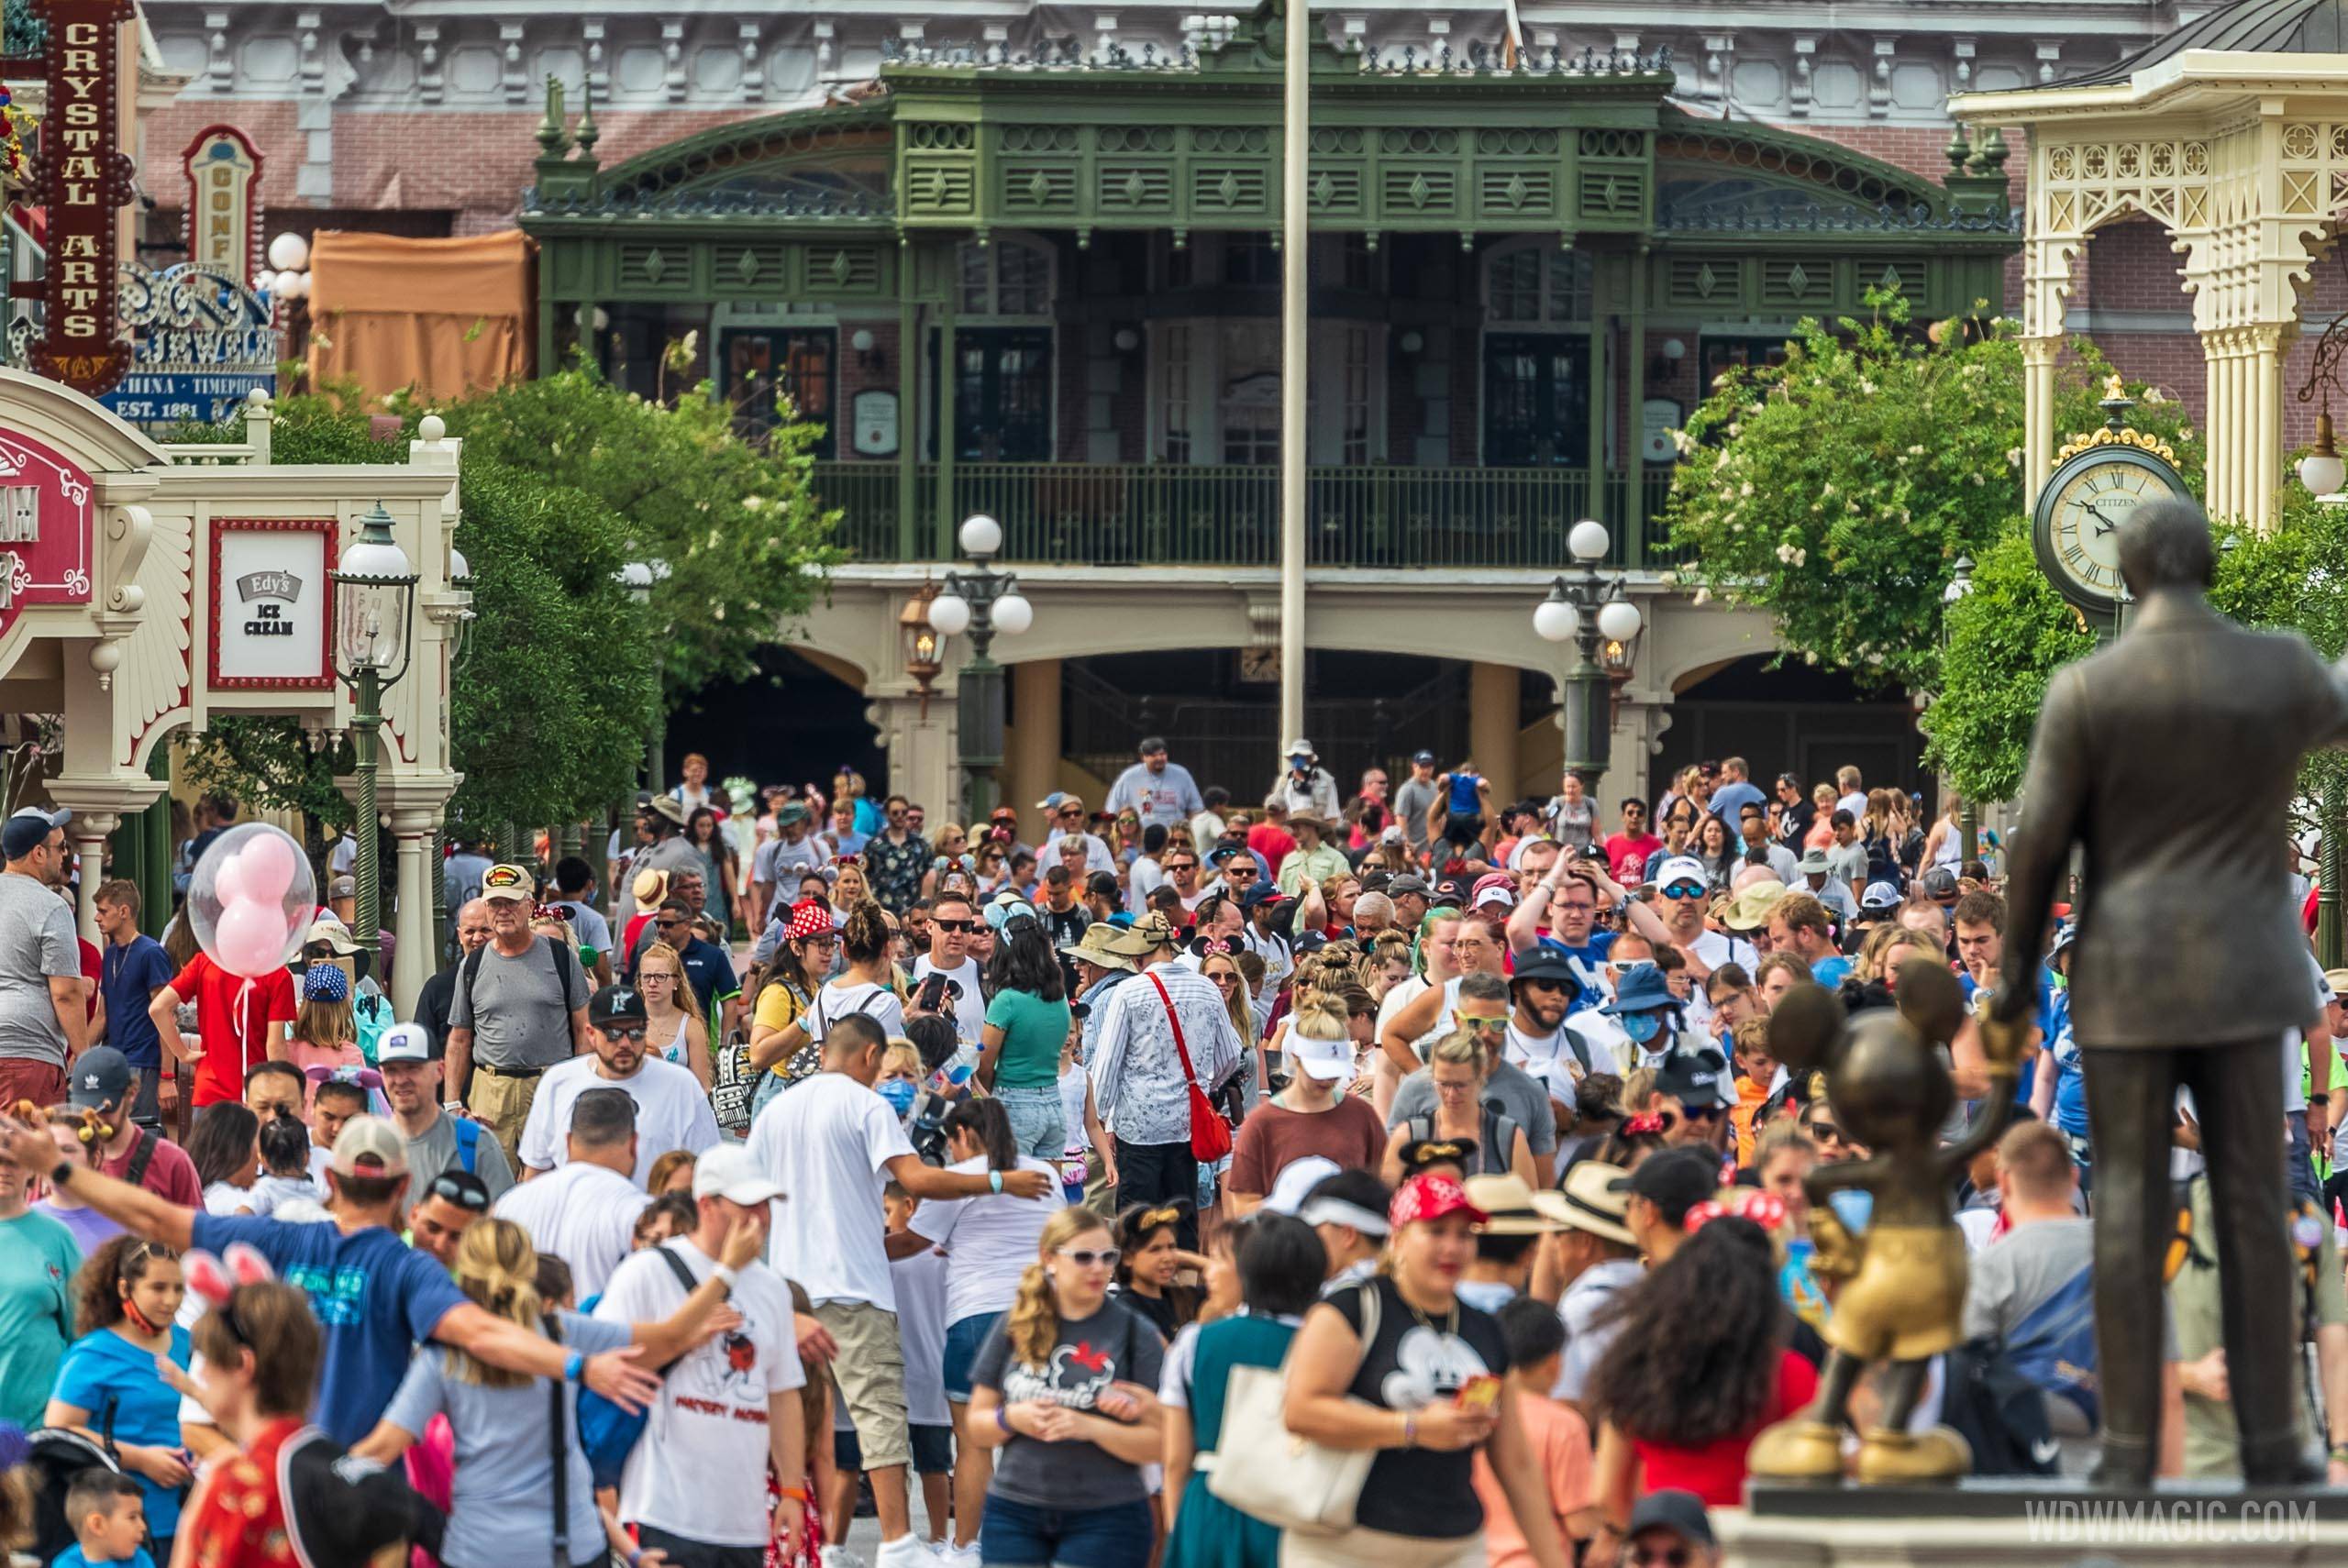 The vast majority of guests no longer wear masks at Walt Disney World